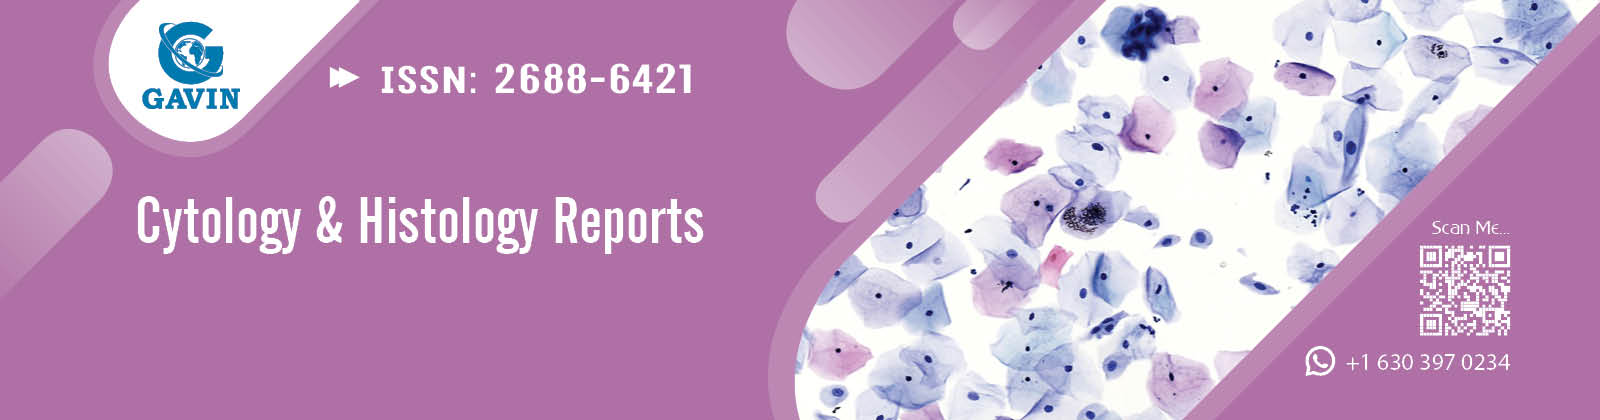 Cytology & Histology Reports 1